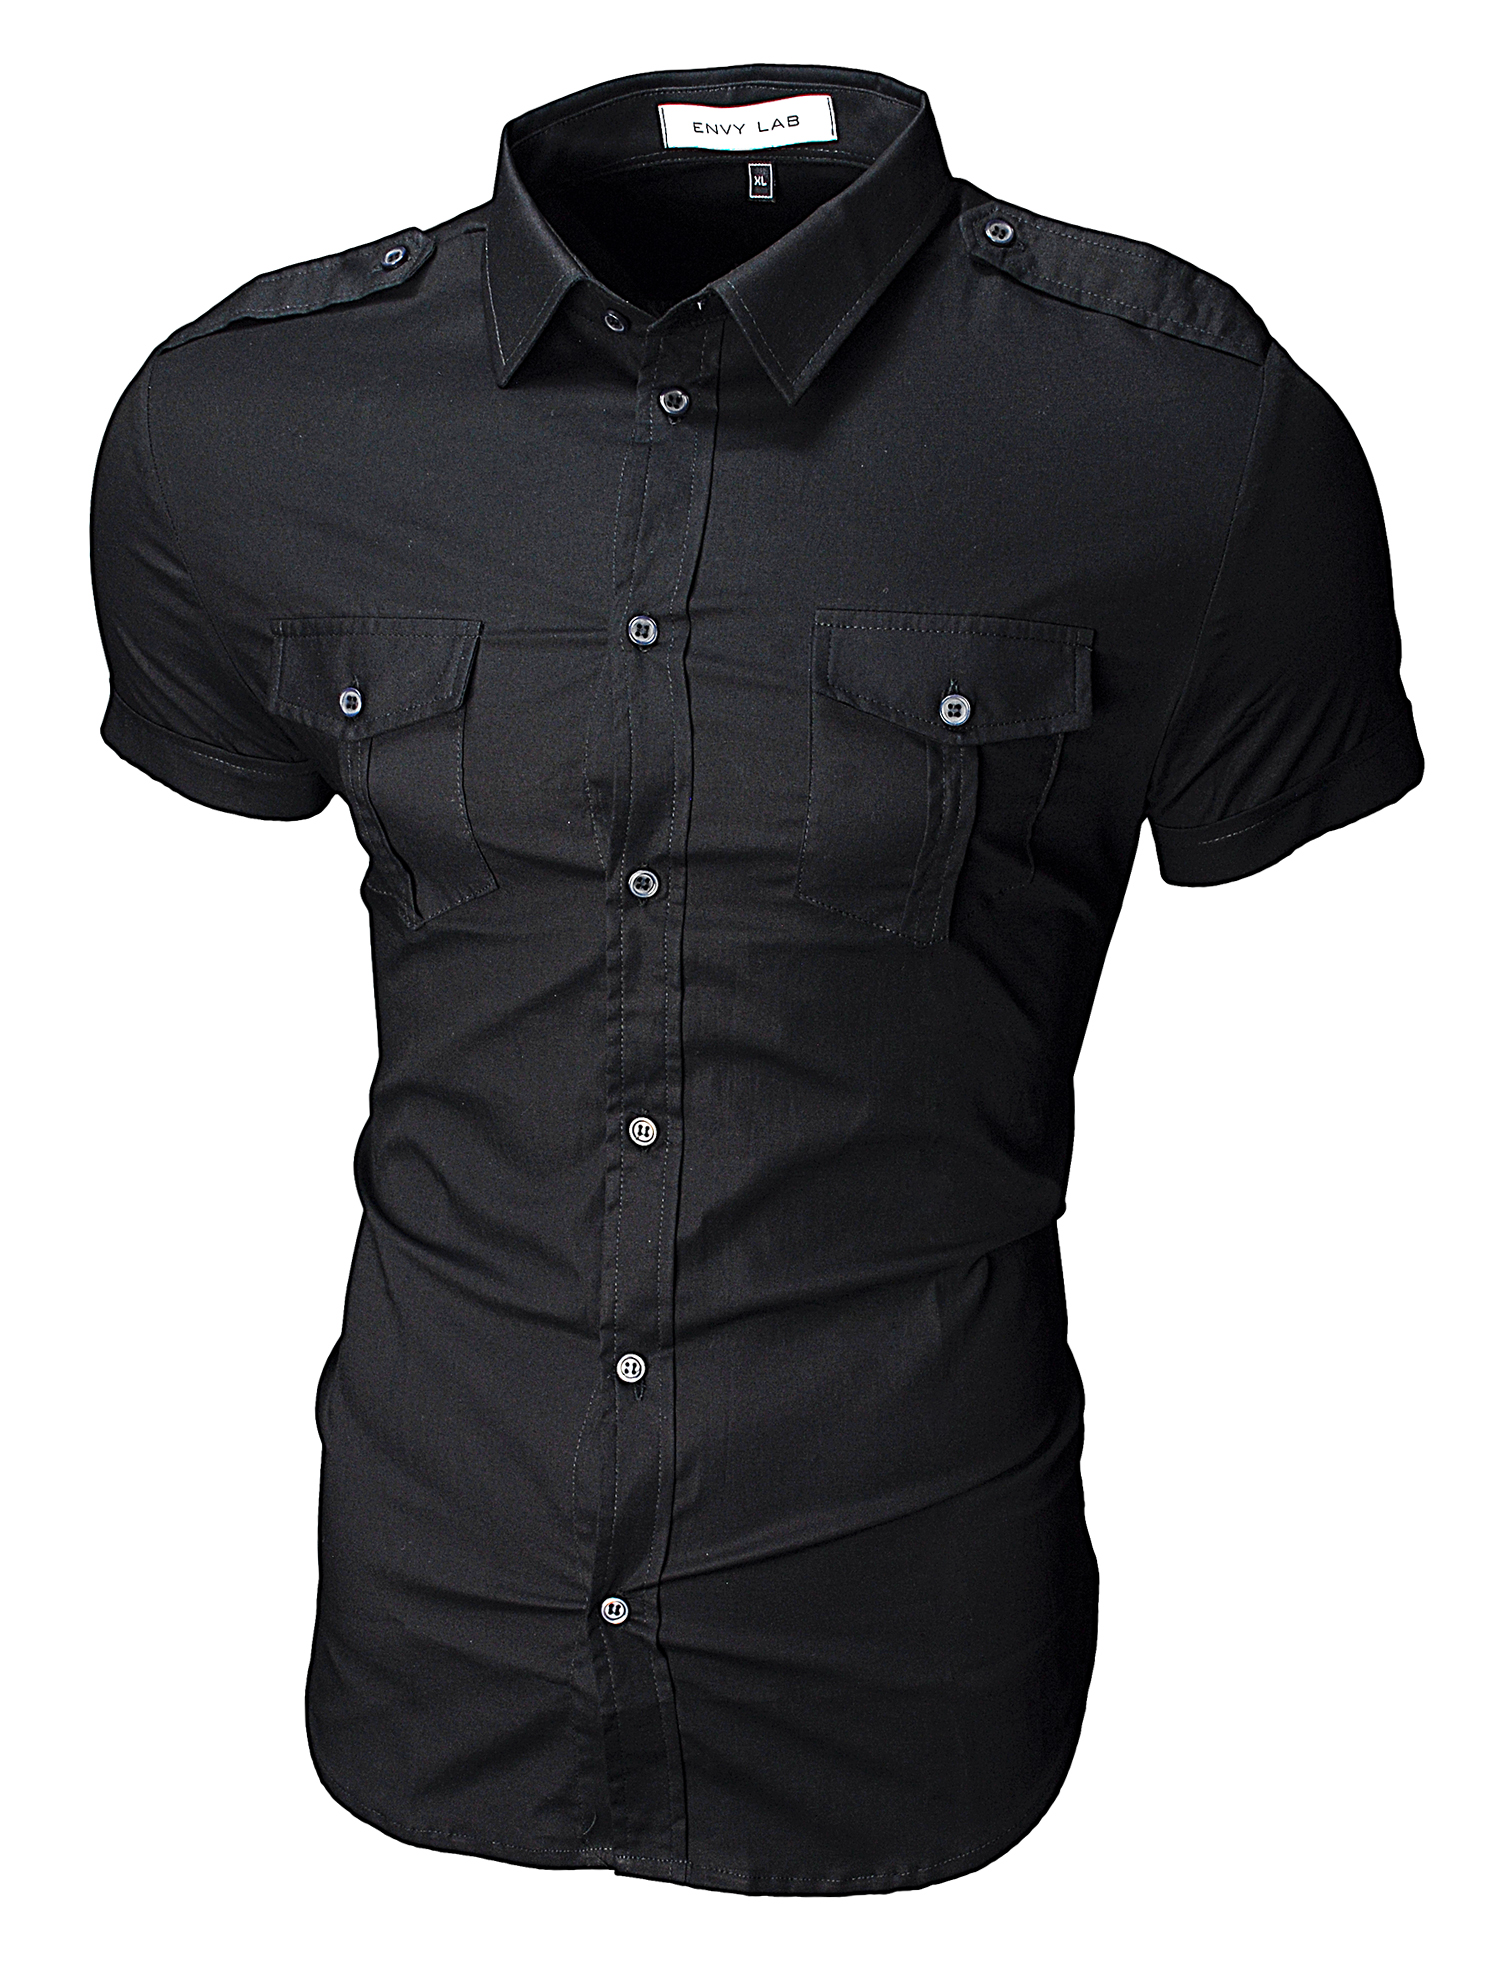 картинка товара рубашка short black в магазине Envy LAB